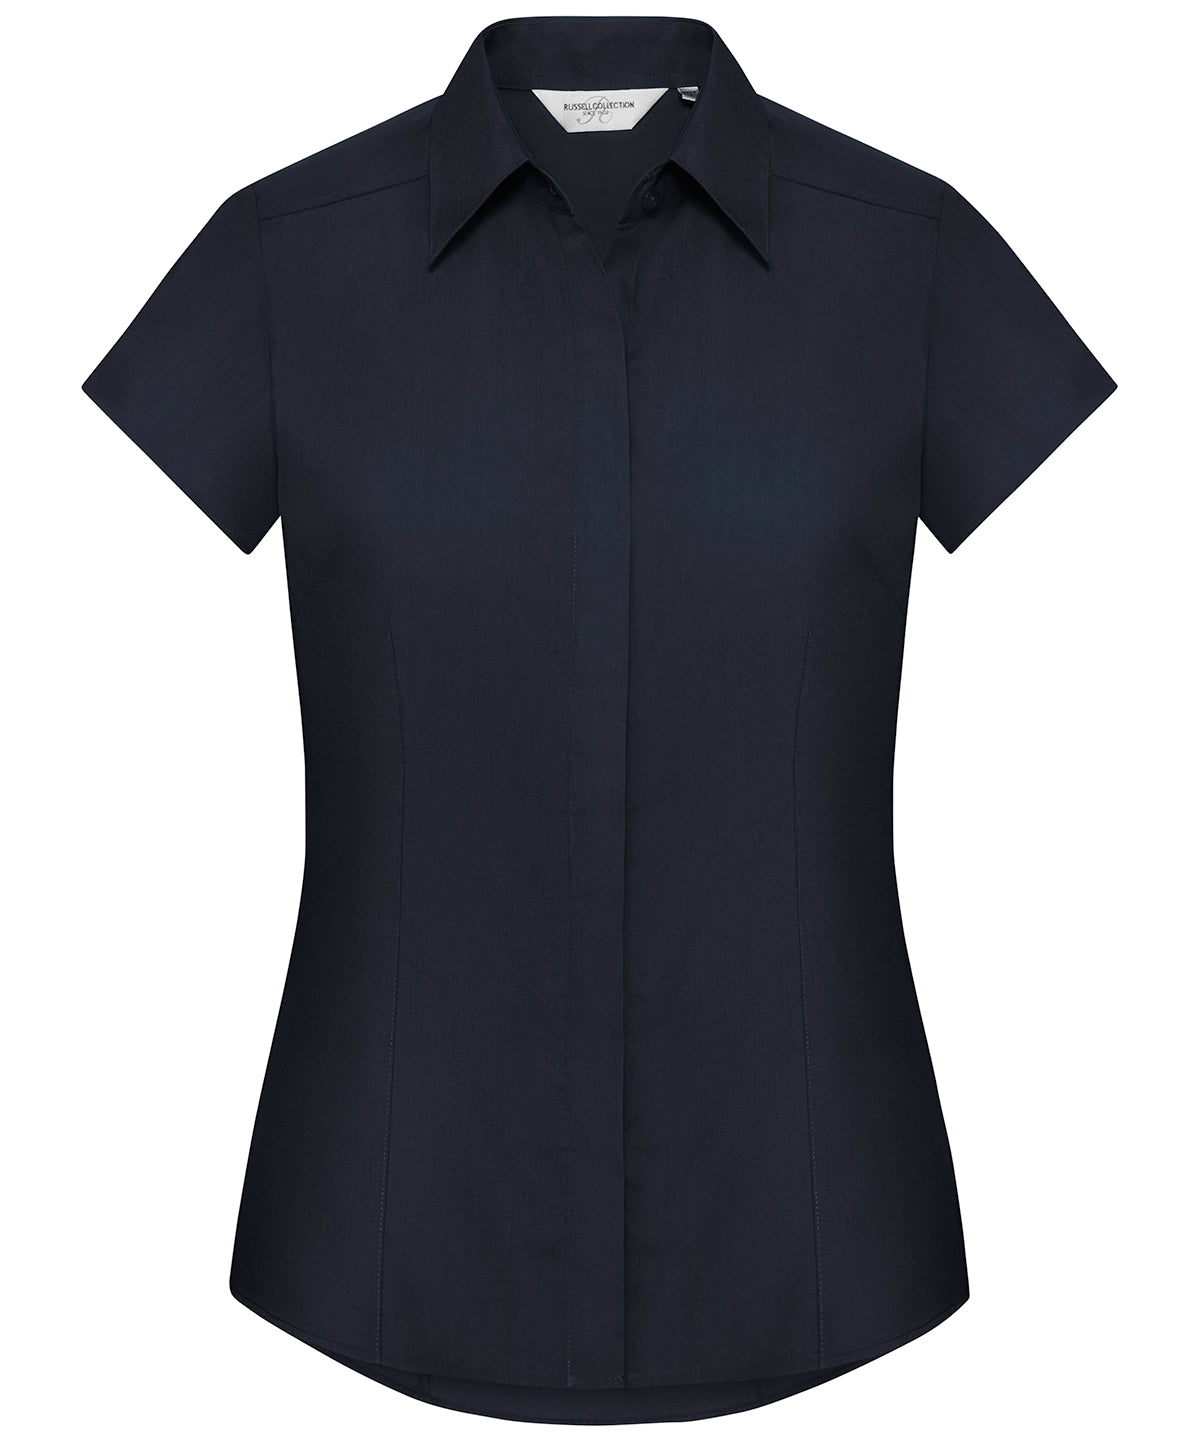 Women's Cap Sleeve Polycotton Easycare Fitted Poplin Shirt